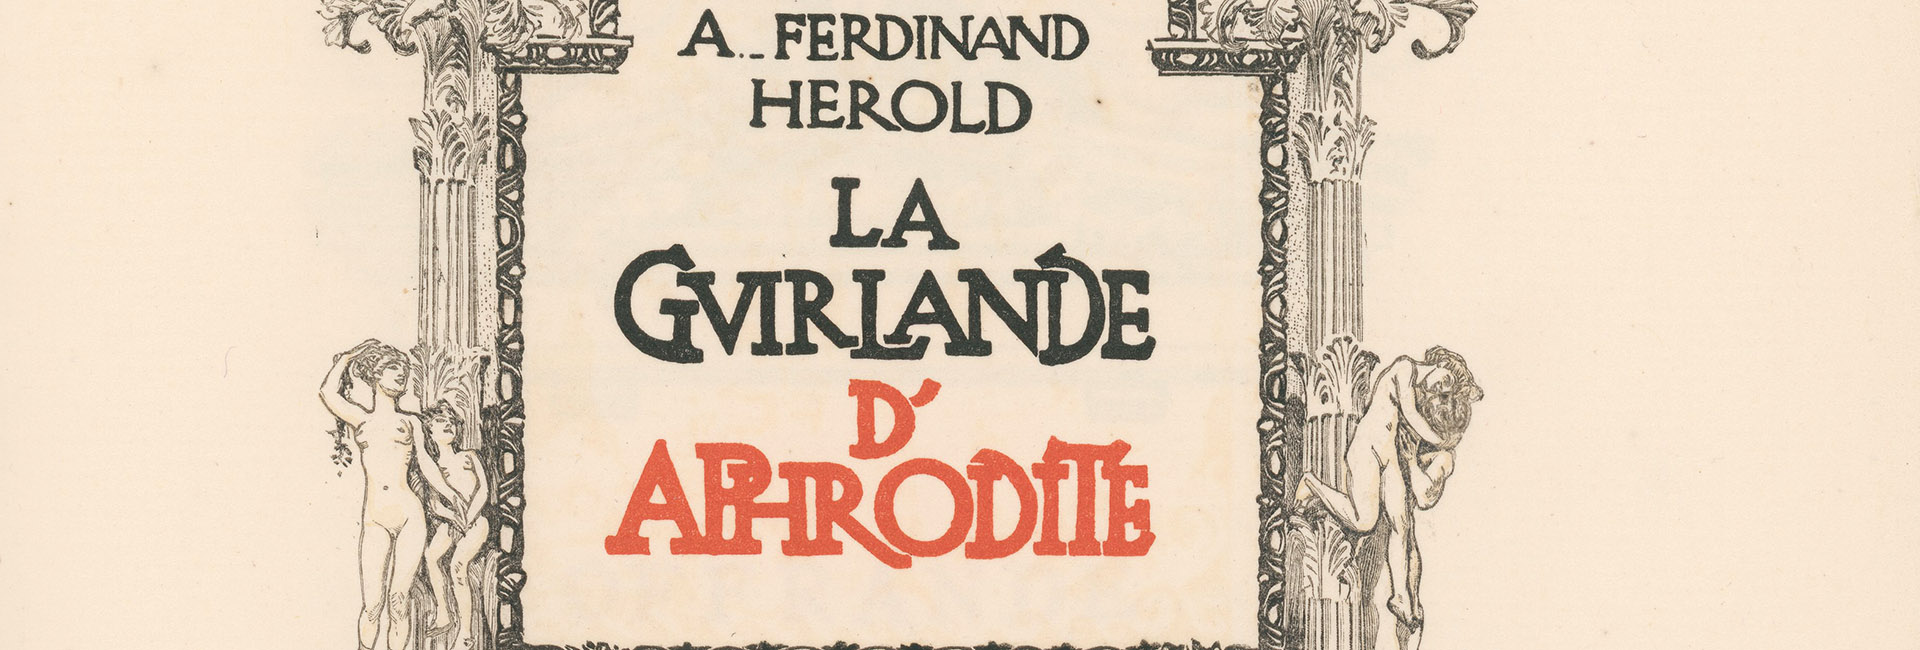 La Guirlande d'Aphrodite, Paris 1919. [A. F. Herold, František Kupka]